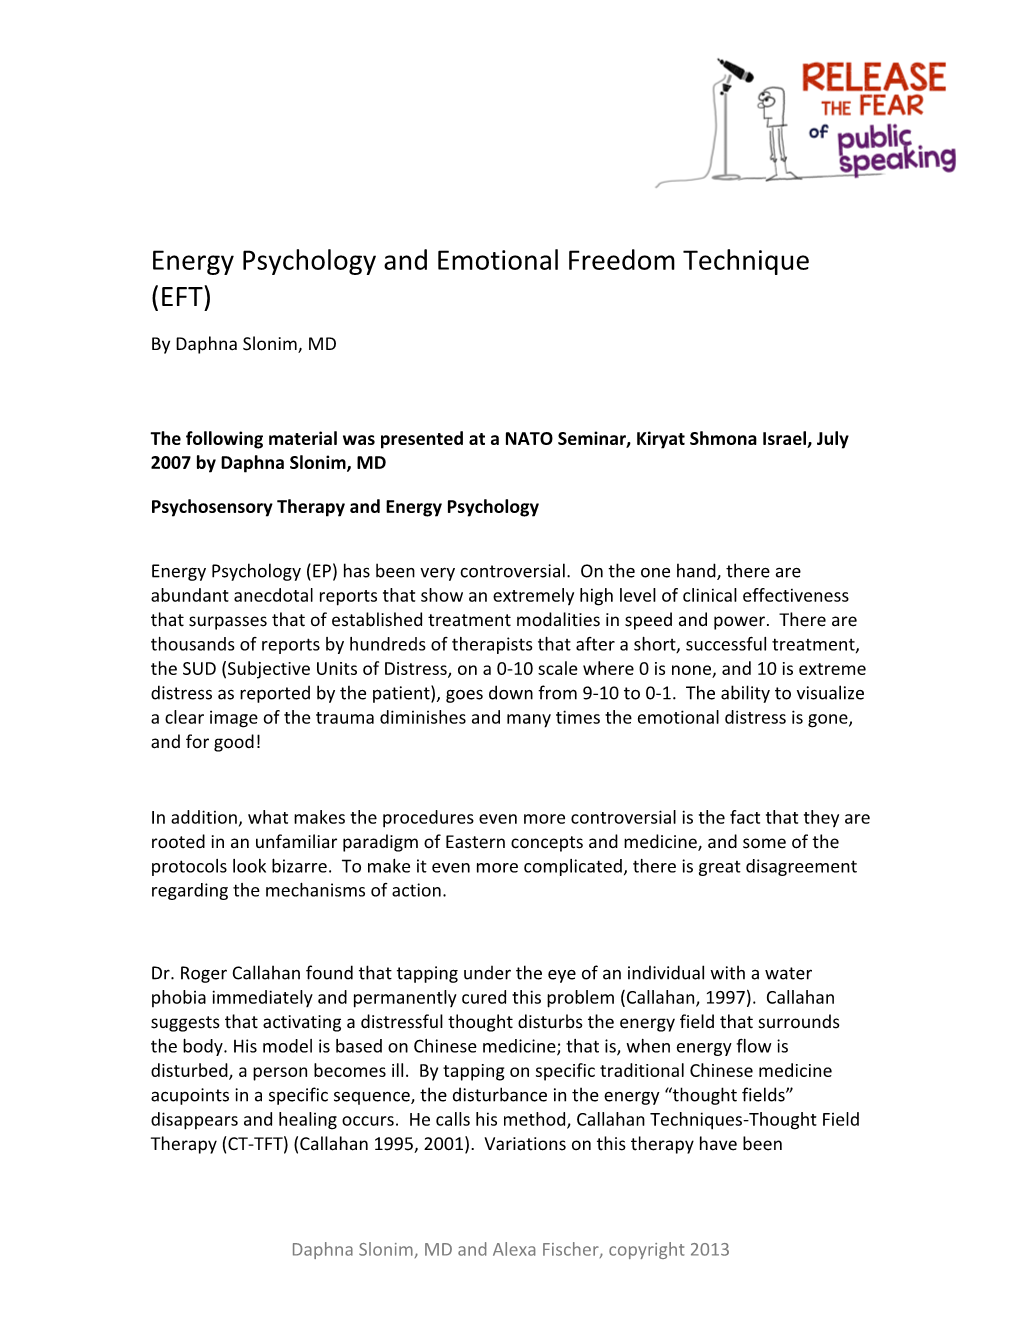 Energy Psychology and Emotional Freedom Technique (EFT)